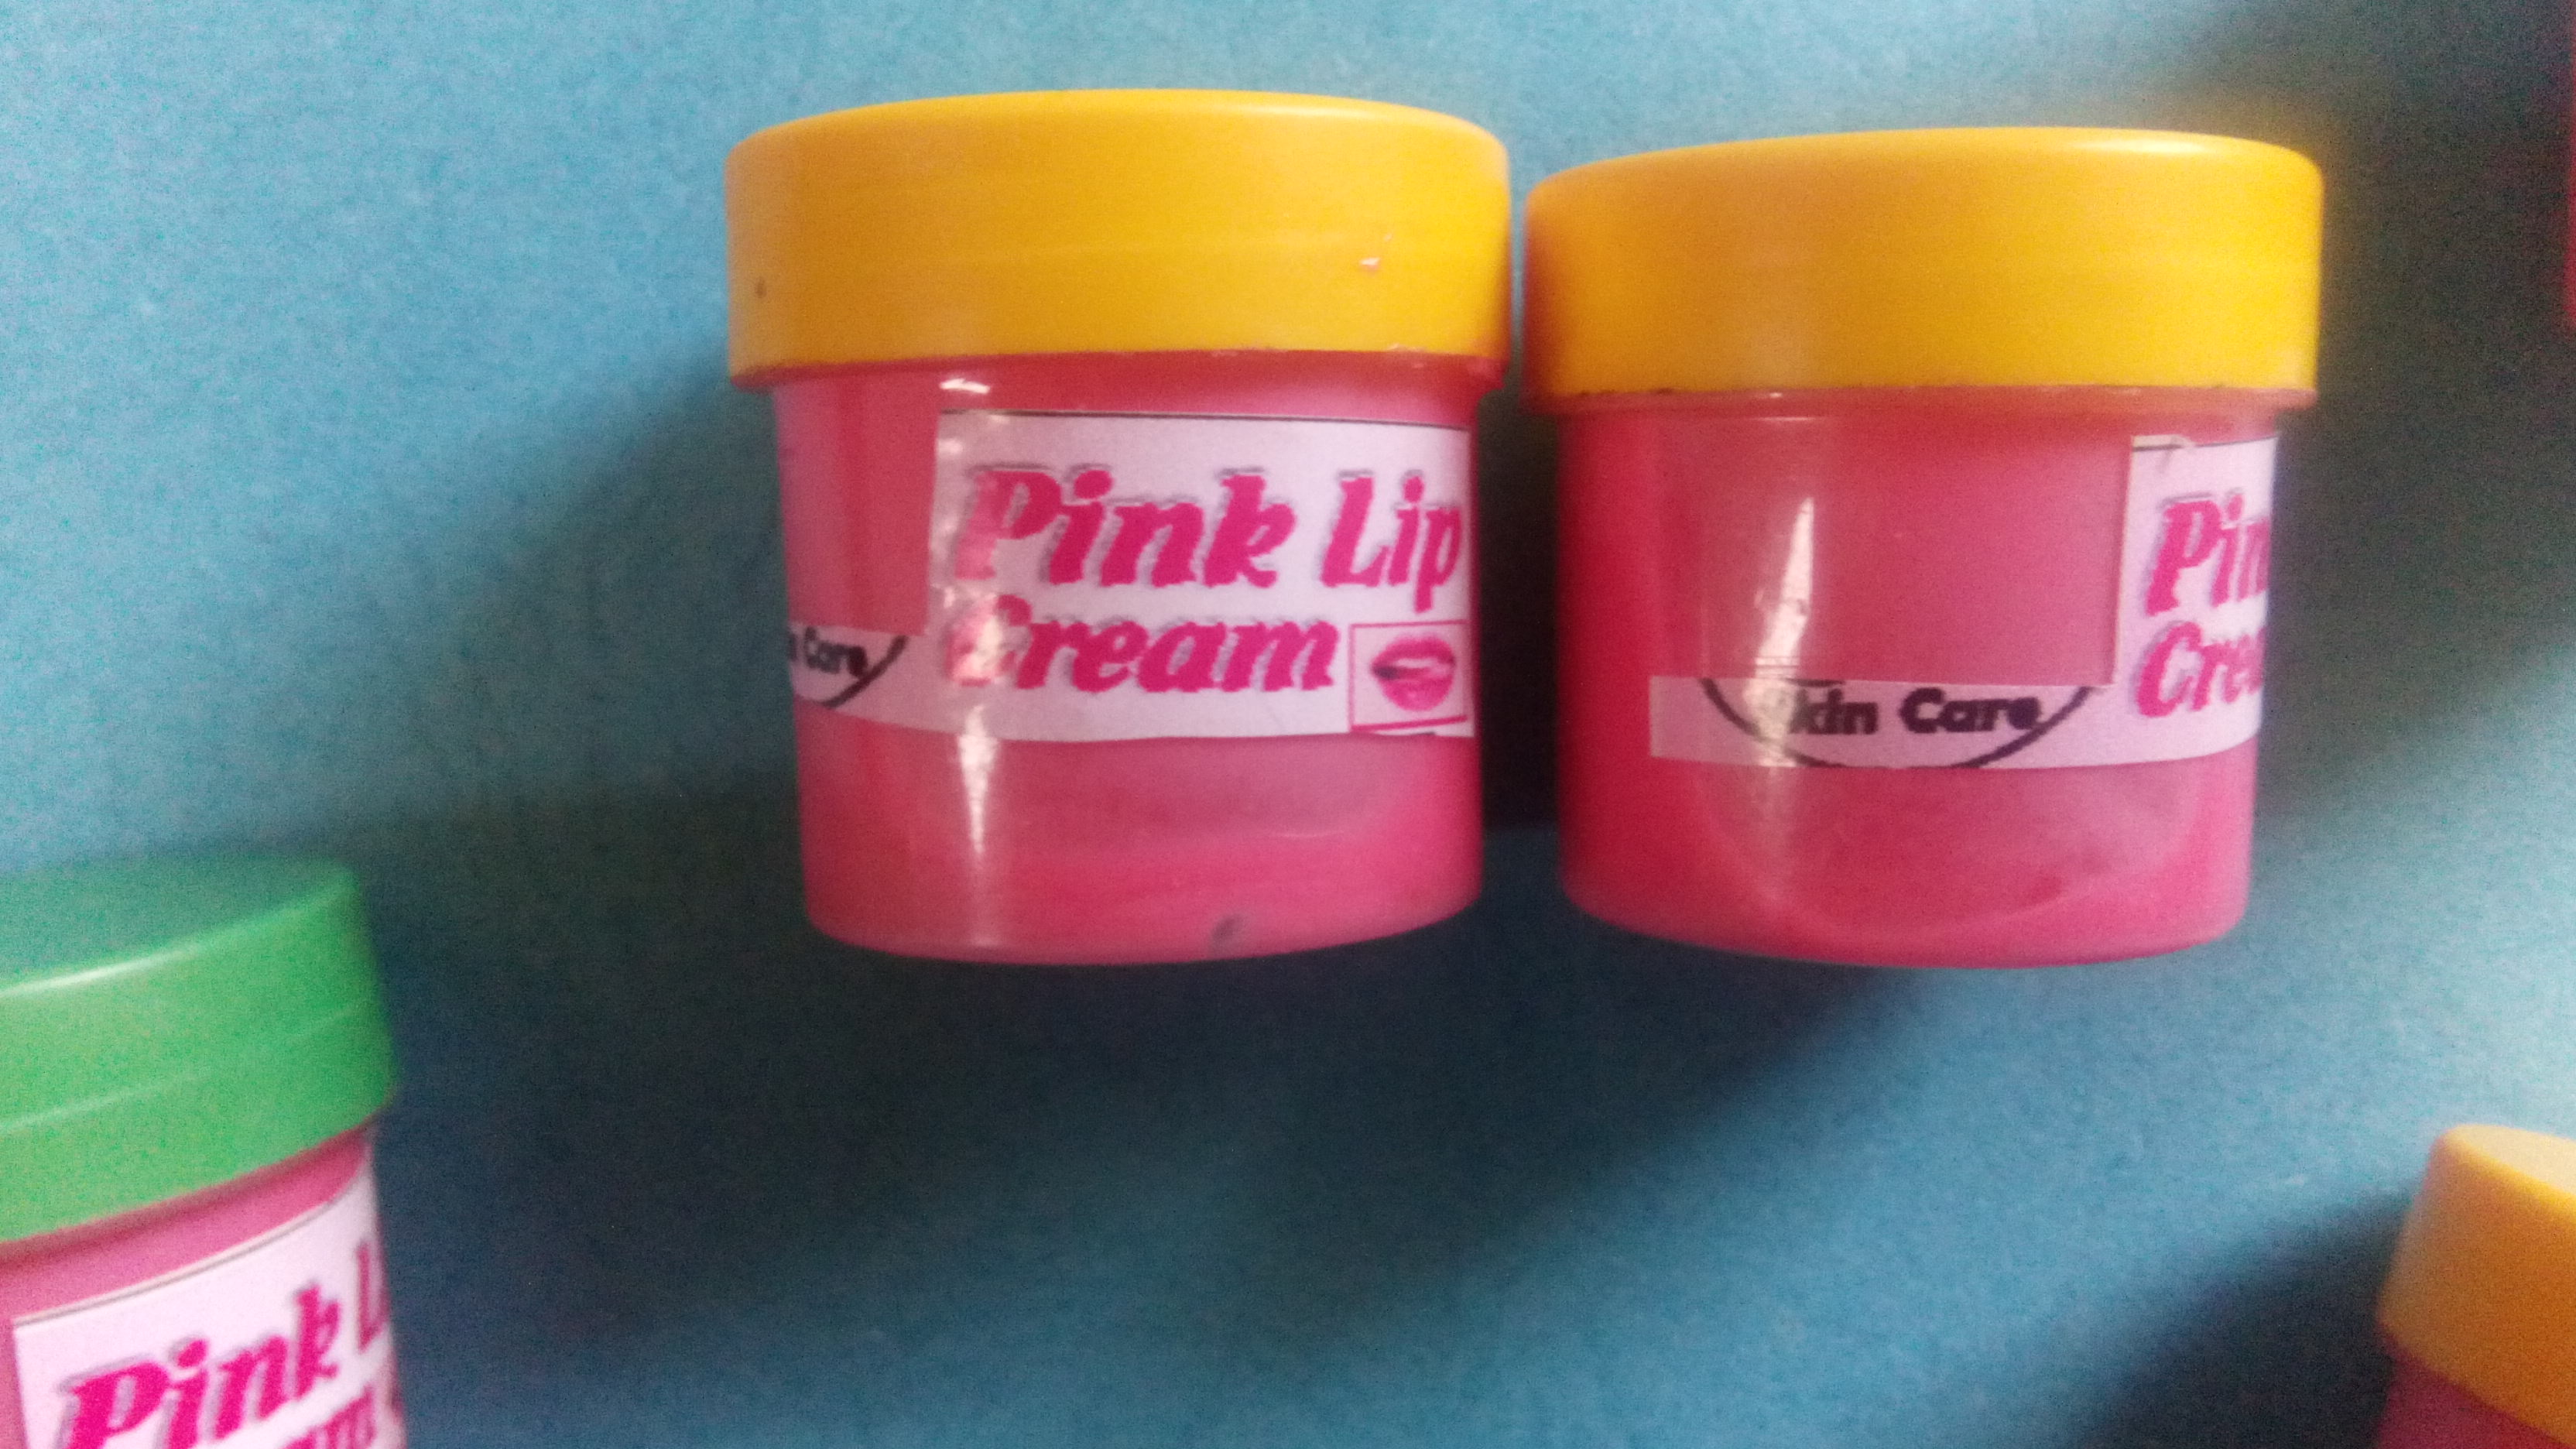 Pink Lip cream